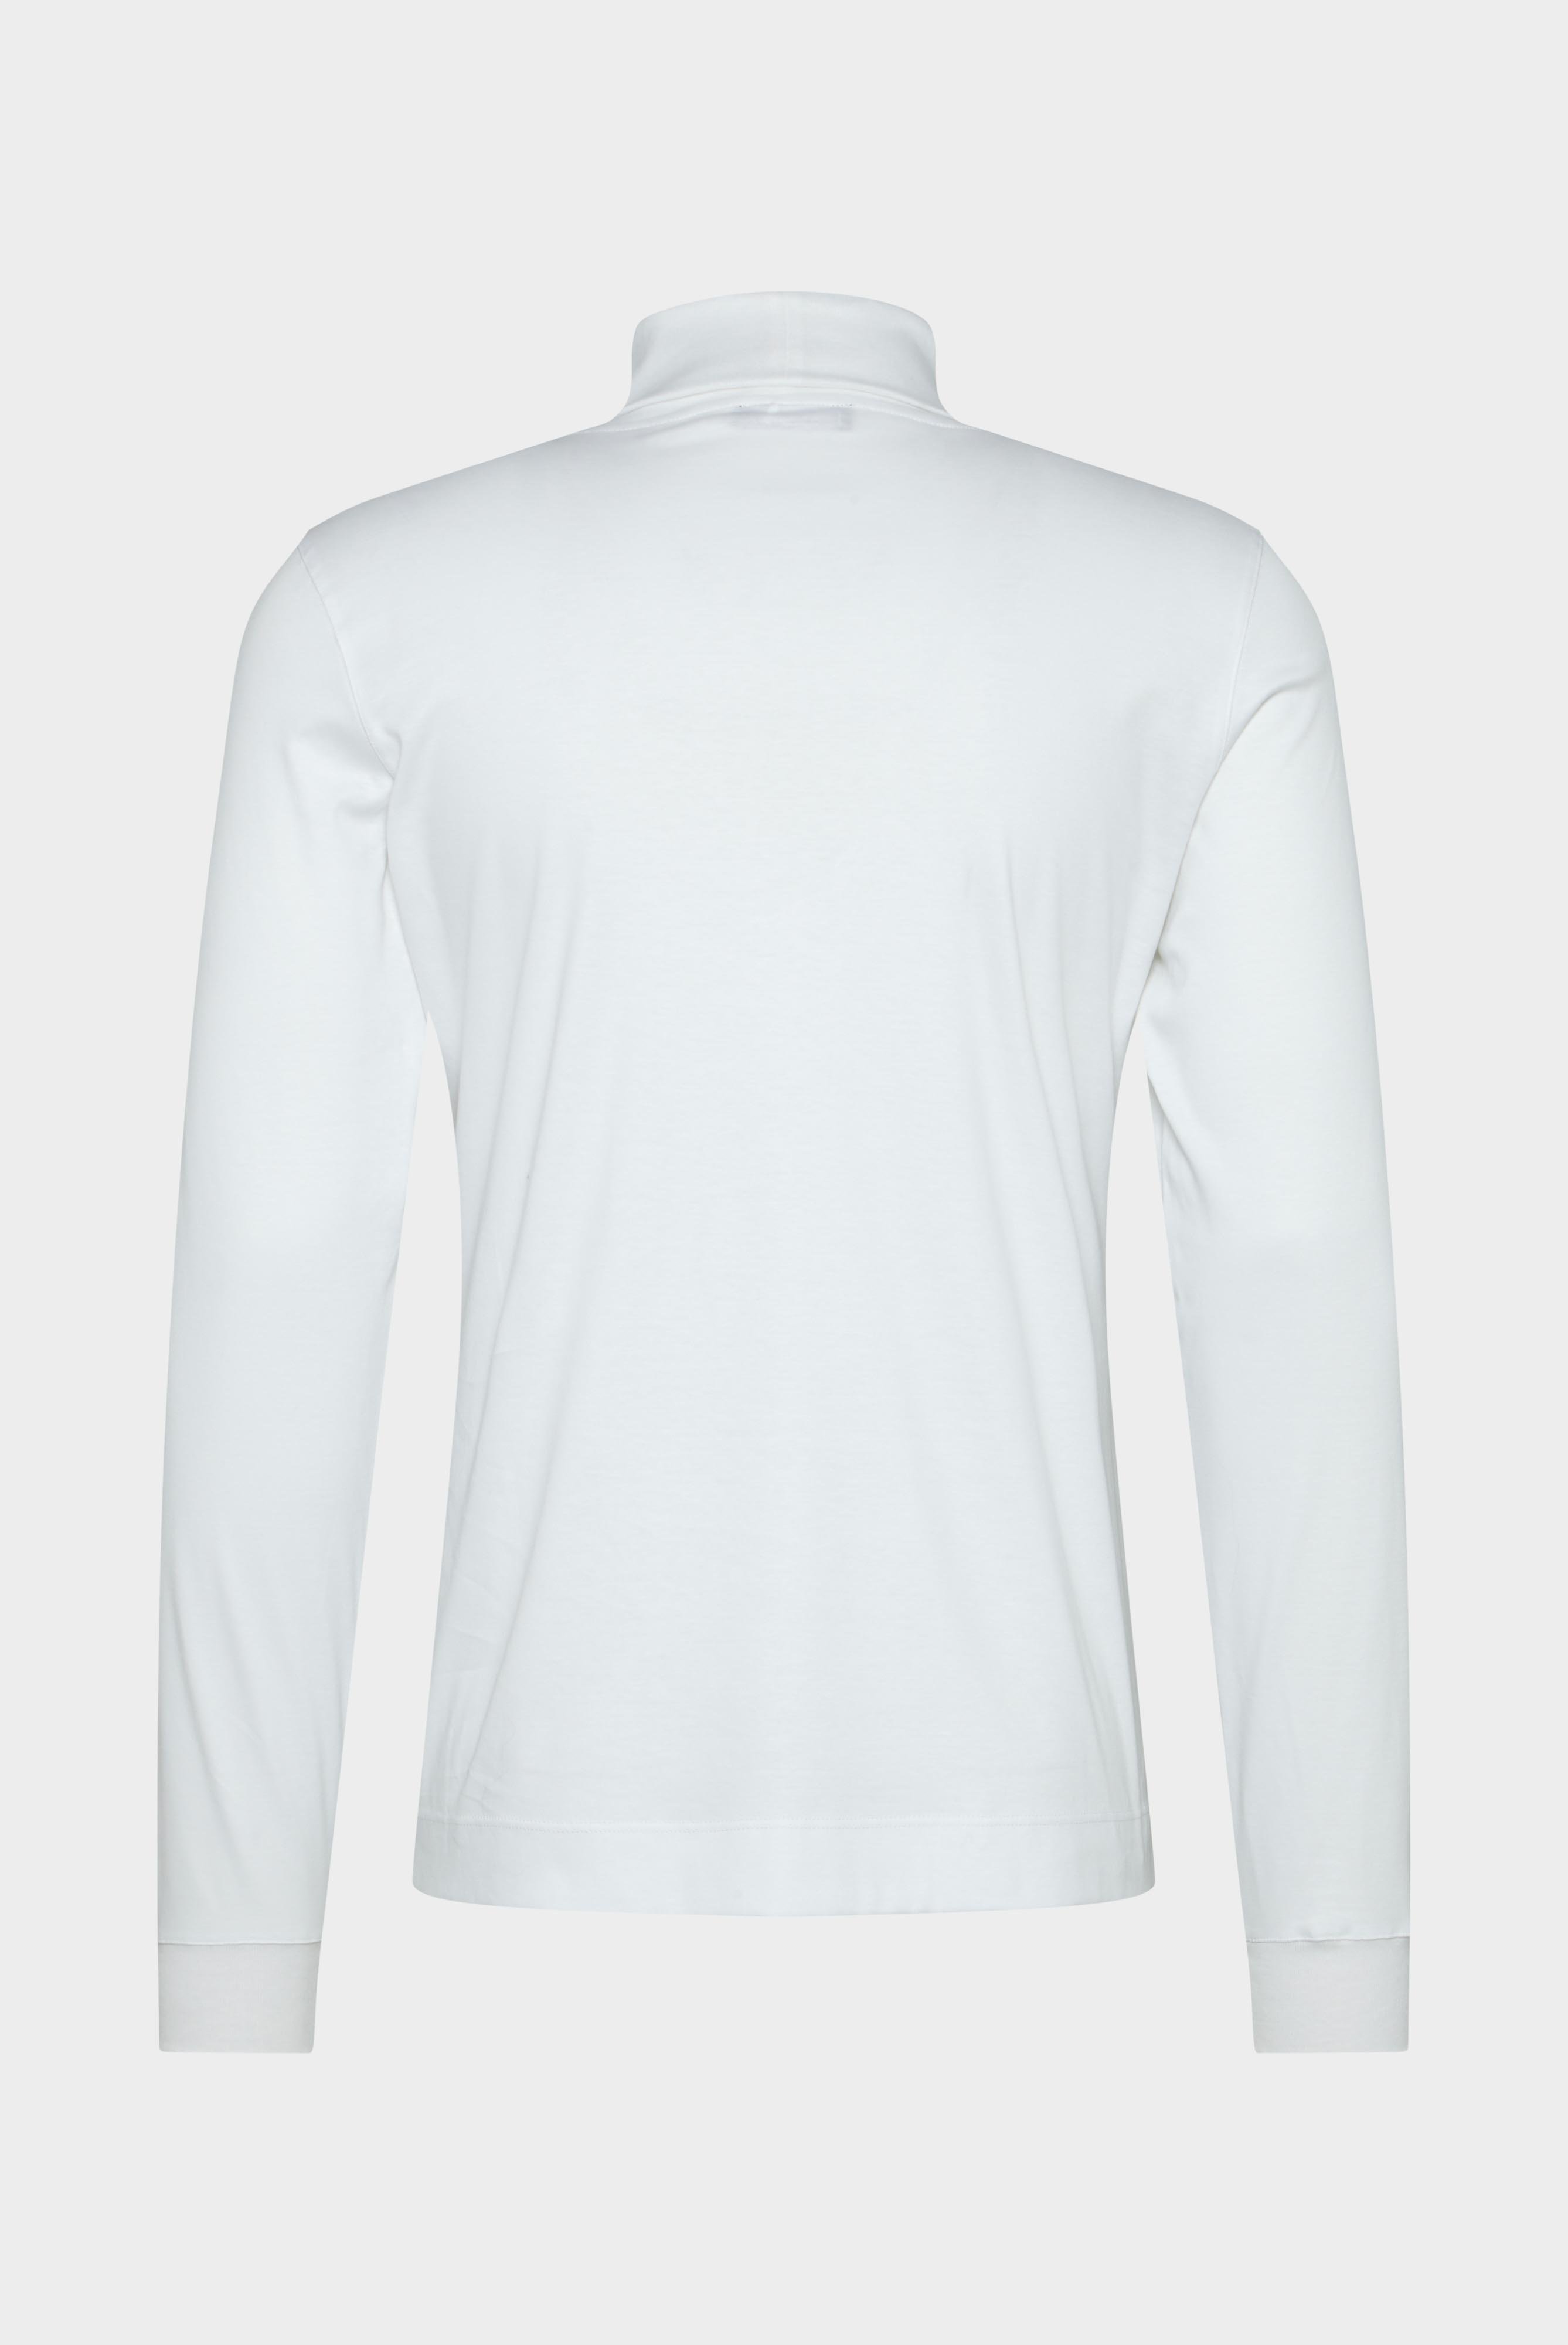 T-Shirts+Rollkragenshirt aus Jersey+20.1719.UX.180031.000.S